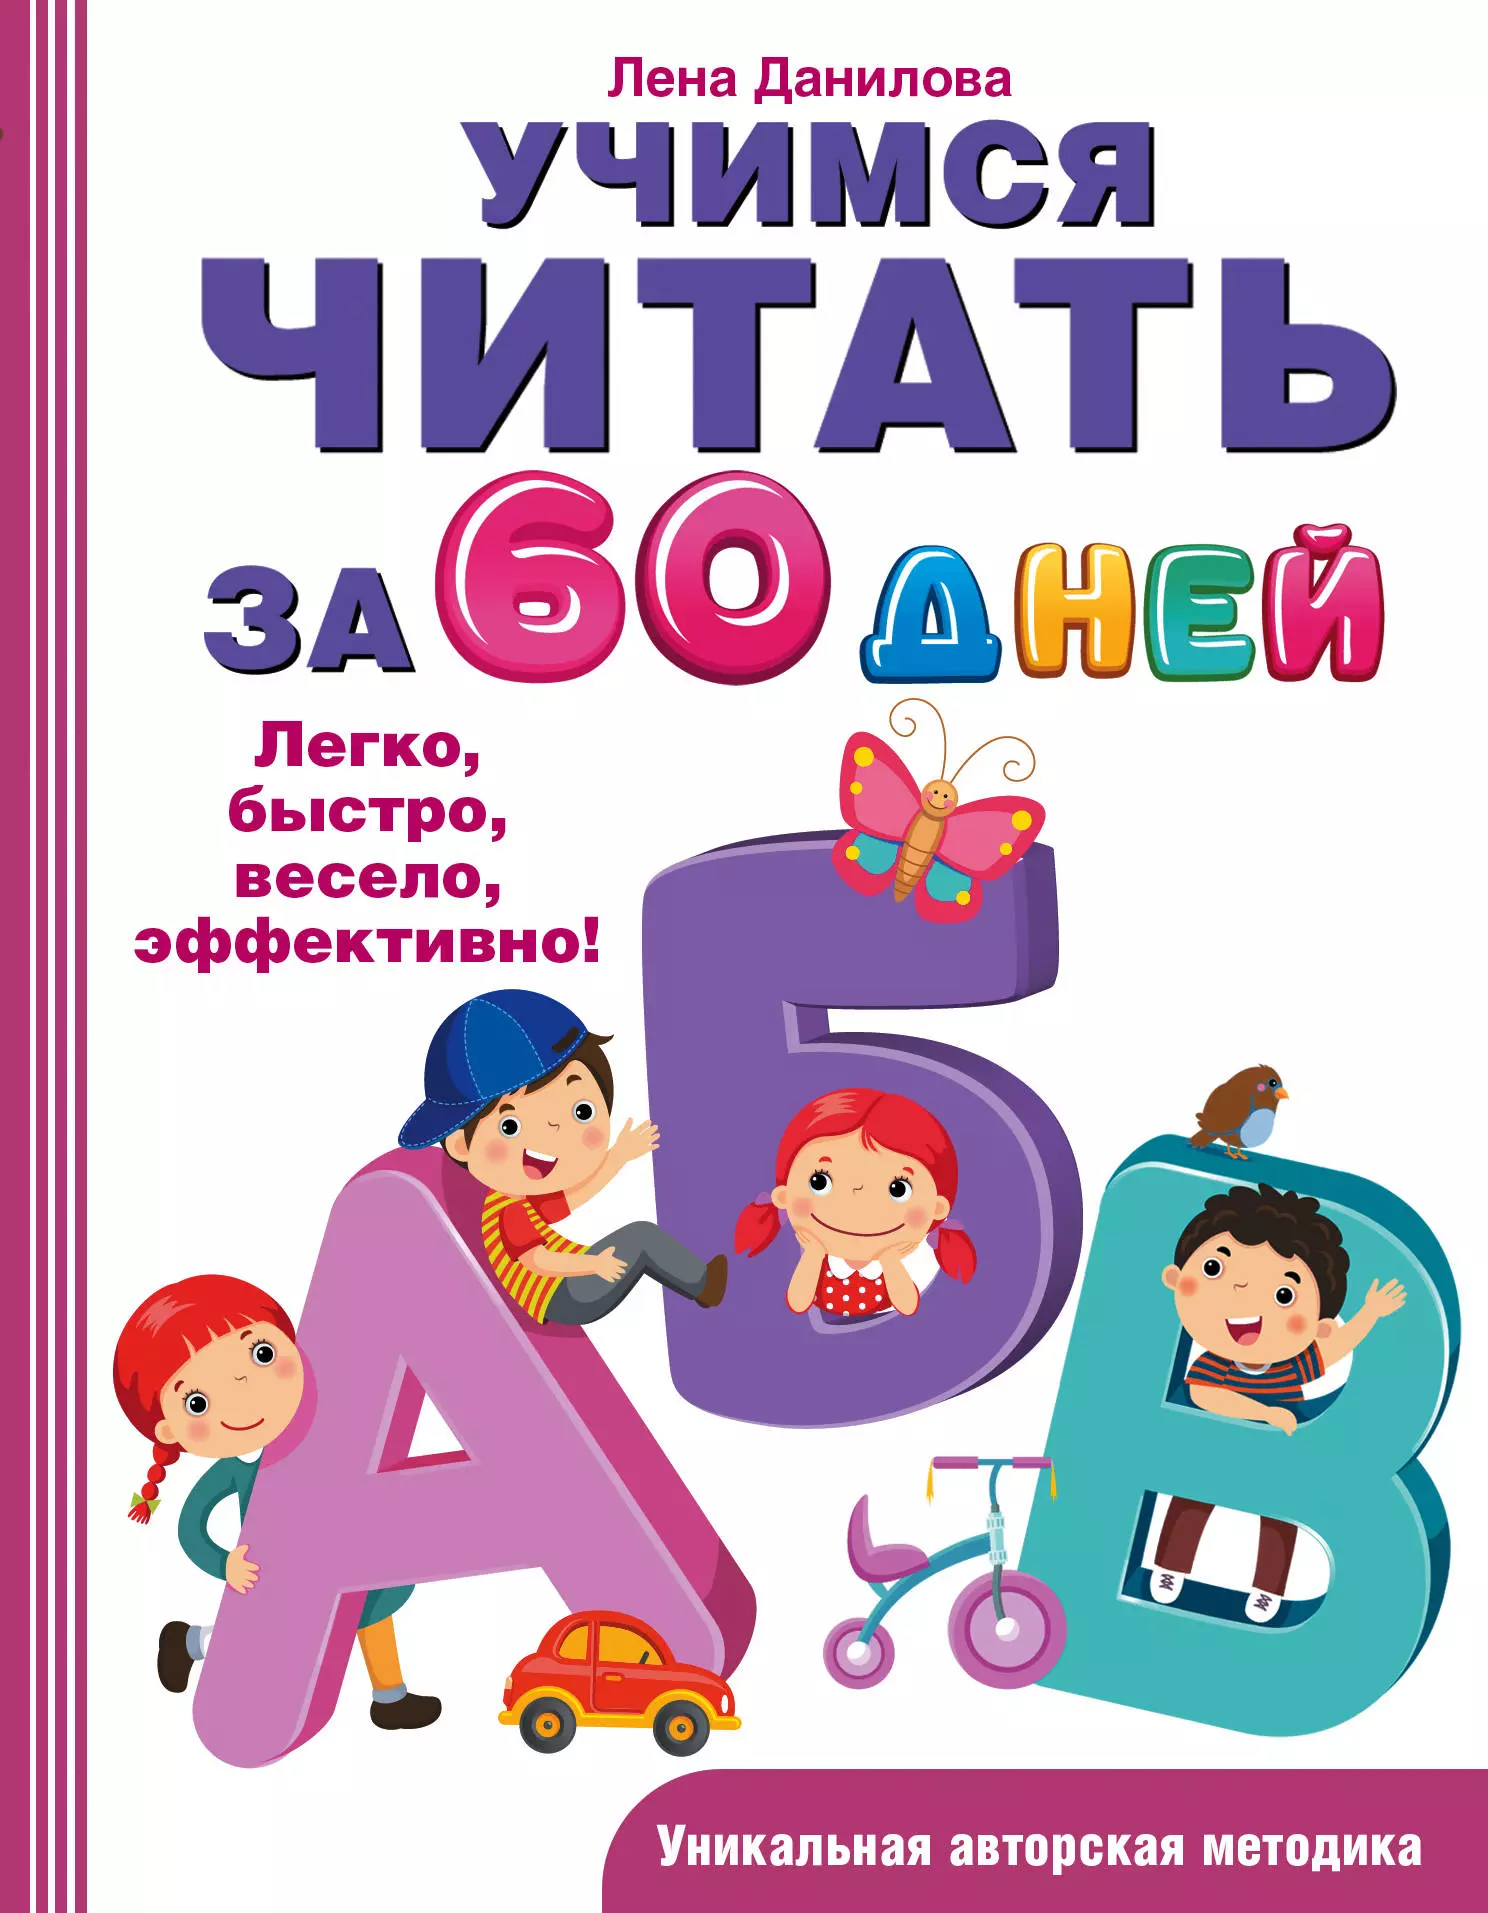 Данилова Елена Александровна - Учимся читать за 60 дней